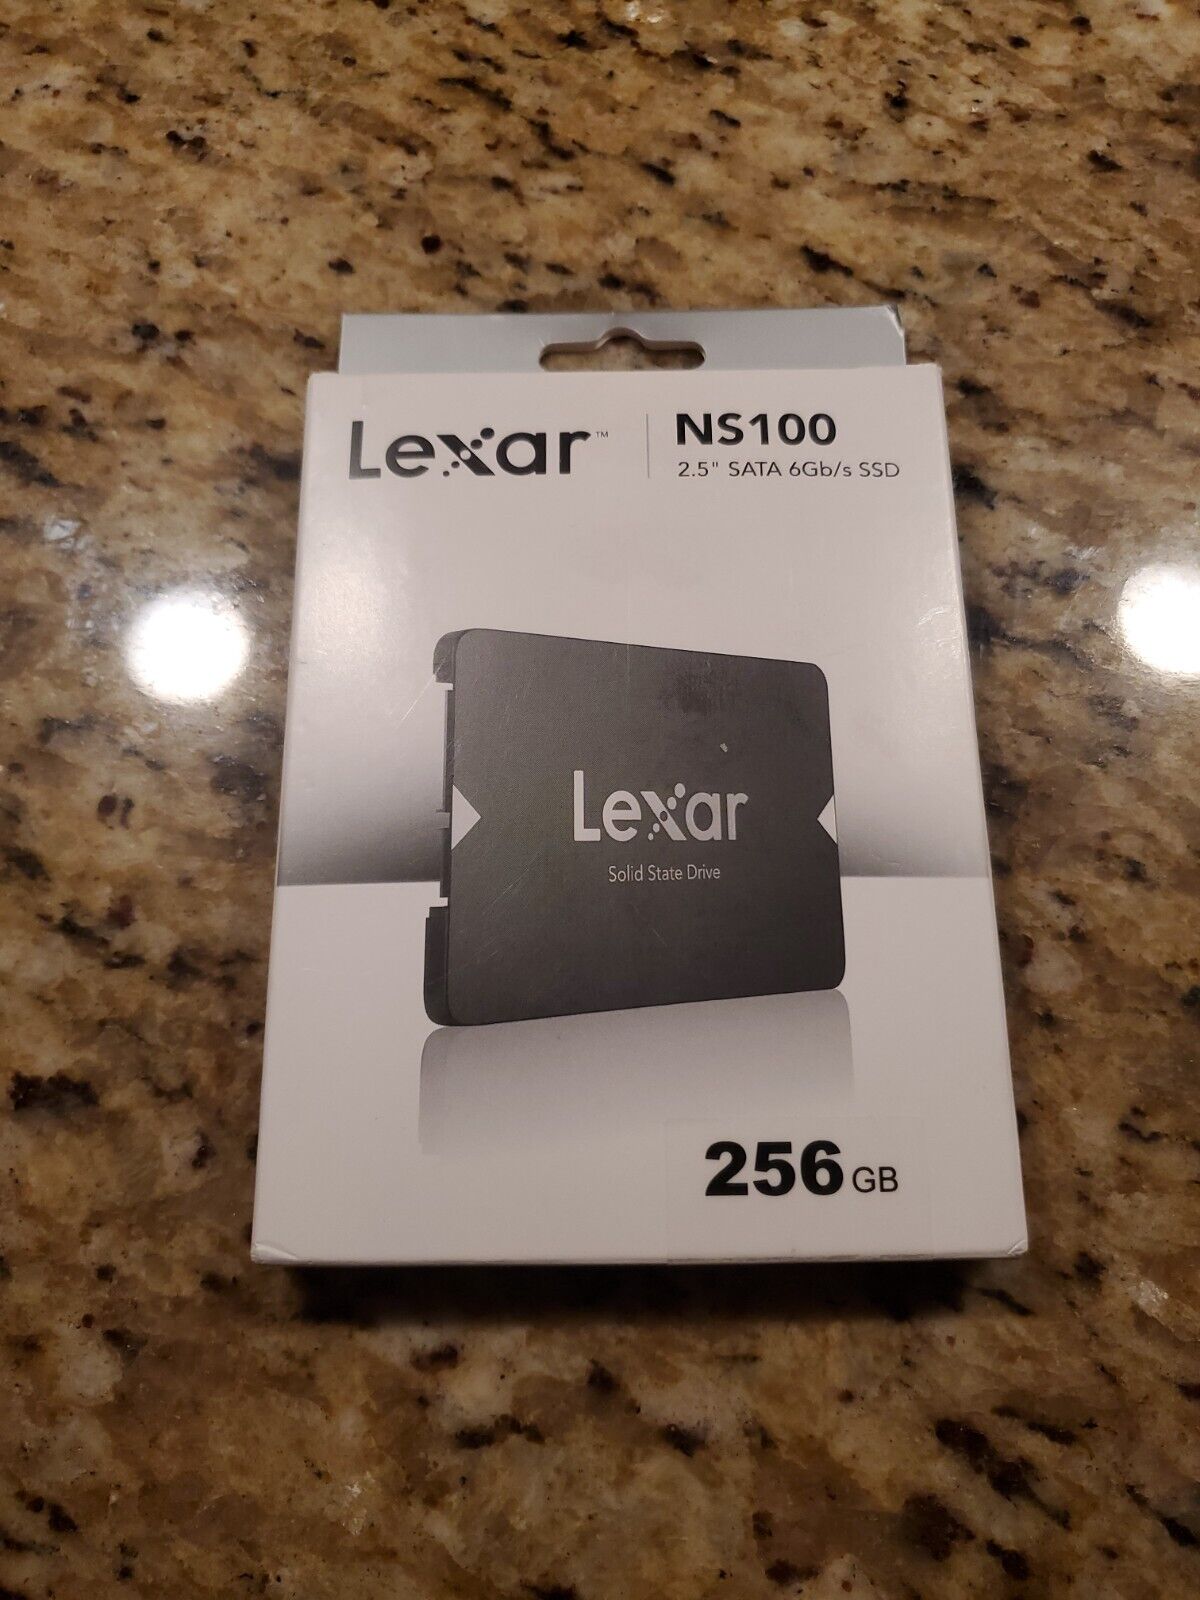 Lexar NS100 256GB 2.5? SATA III Internal SSD, Solid State Drive, Up To 520MBs R